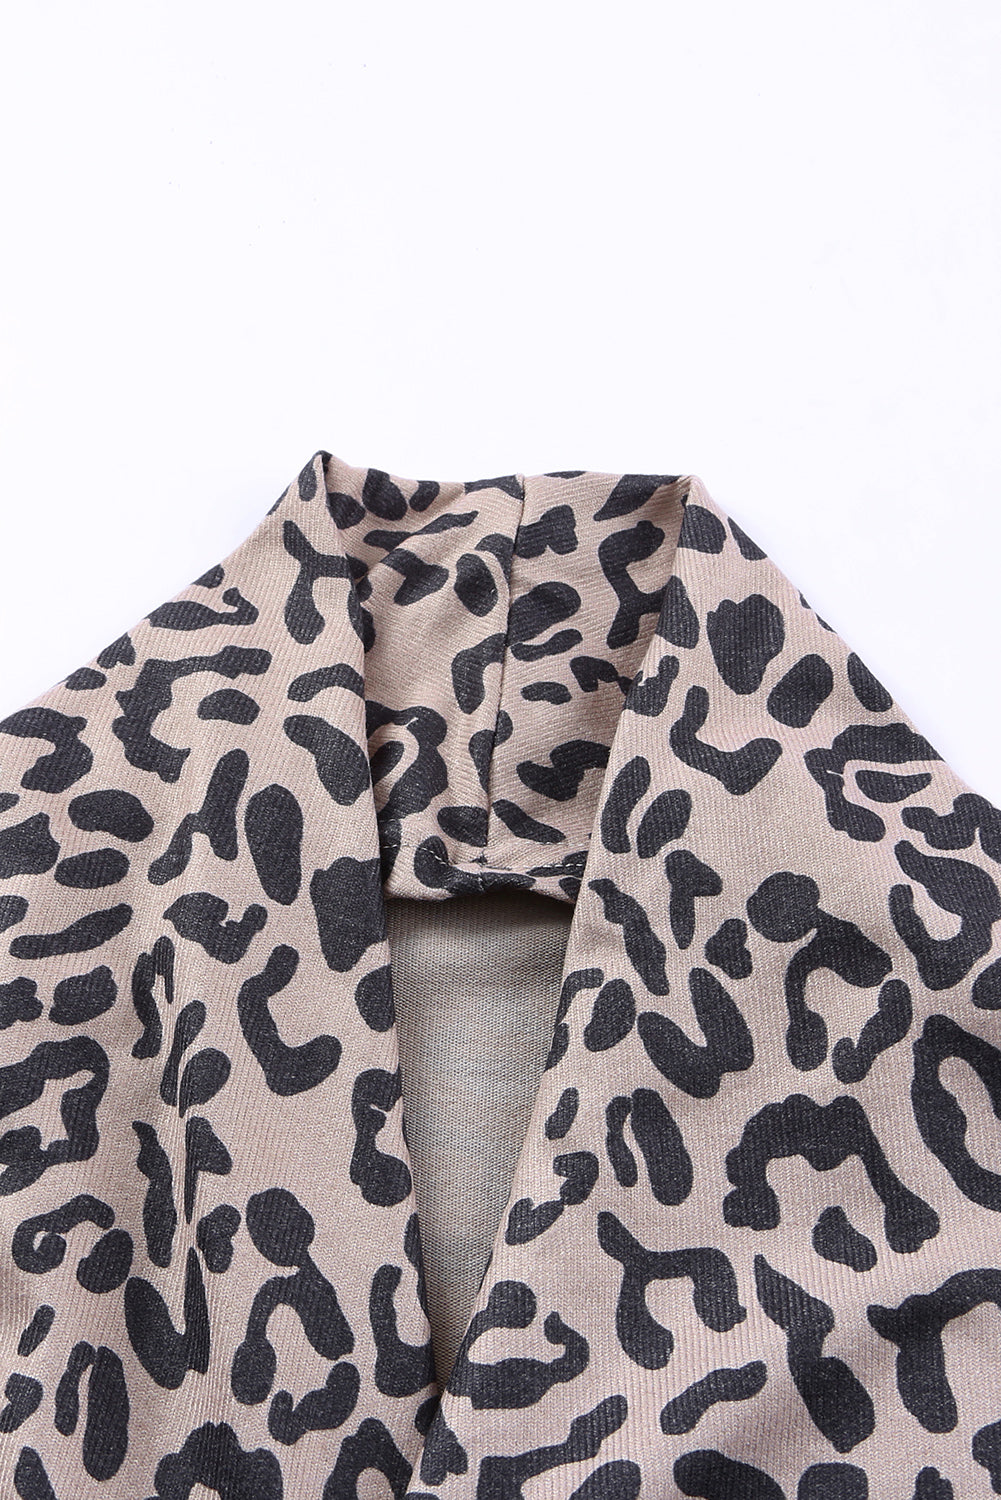 Cheetah Print Cowl Neck Open Front Long Cardigan